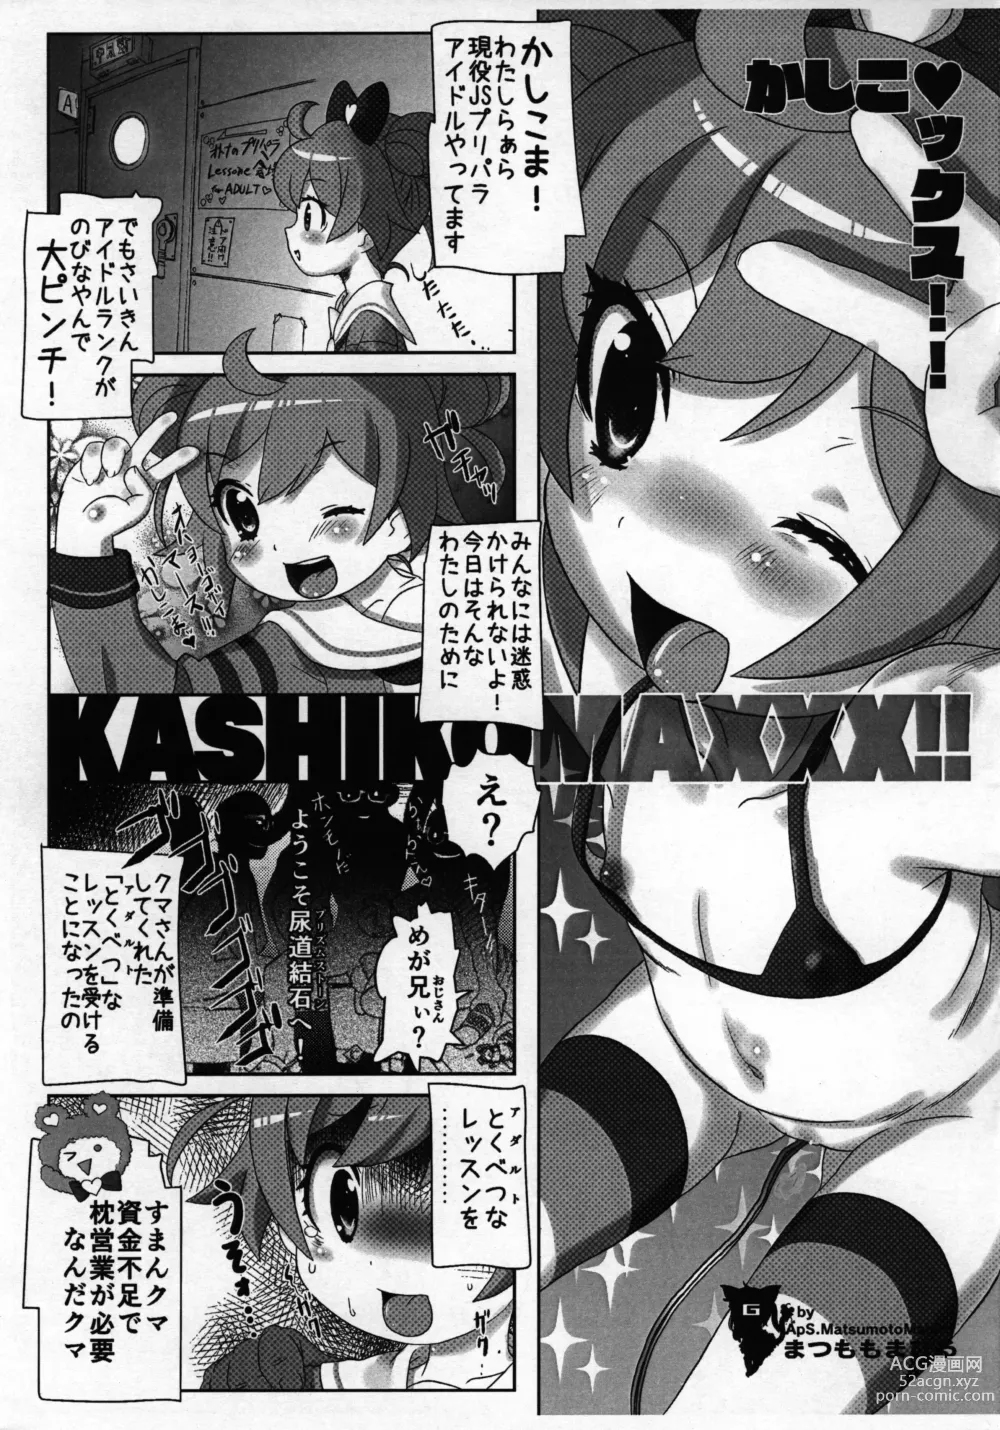 Page 2 of doujinshi KASHIKOMAXXX!!